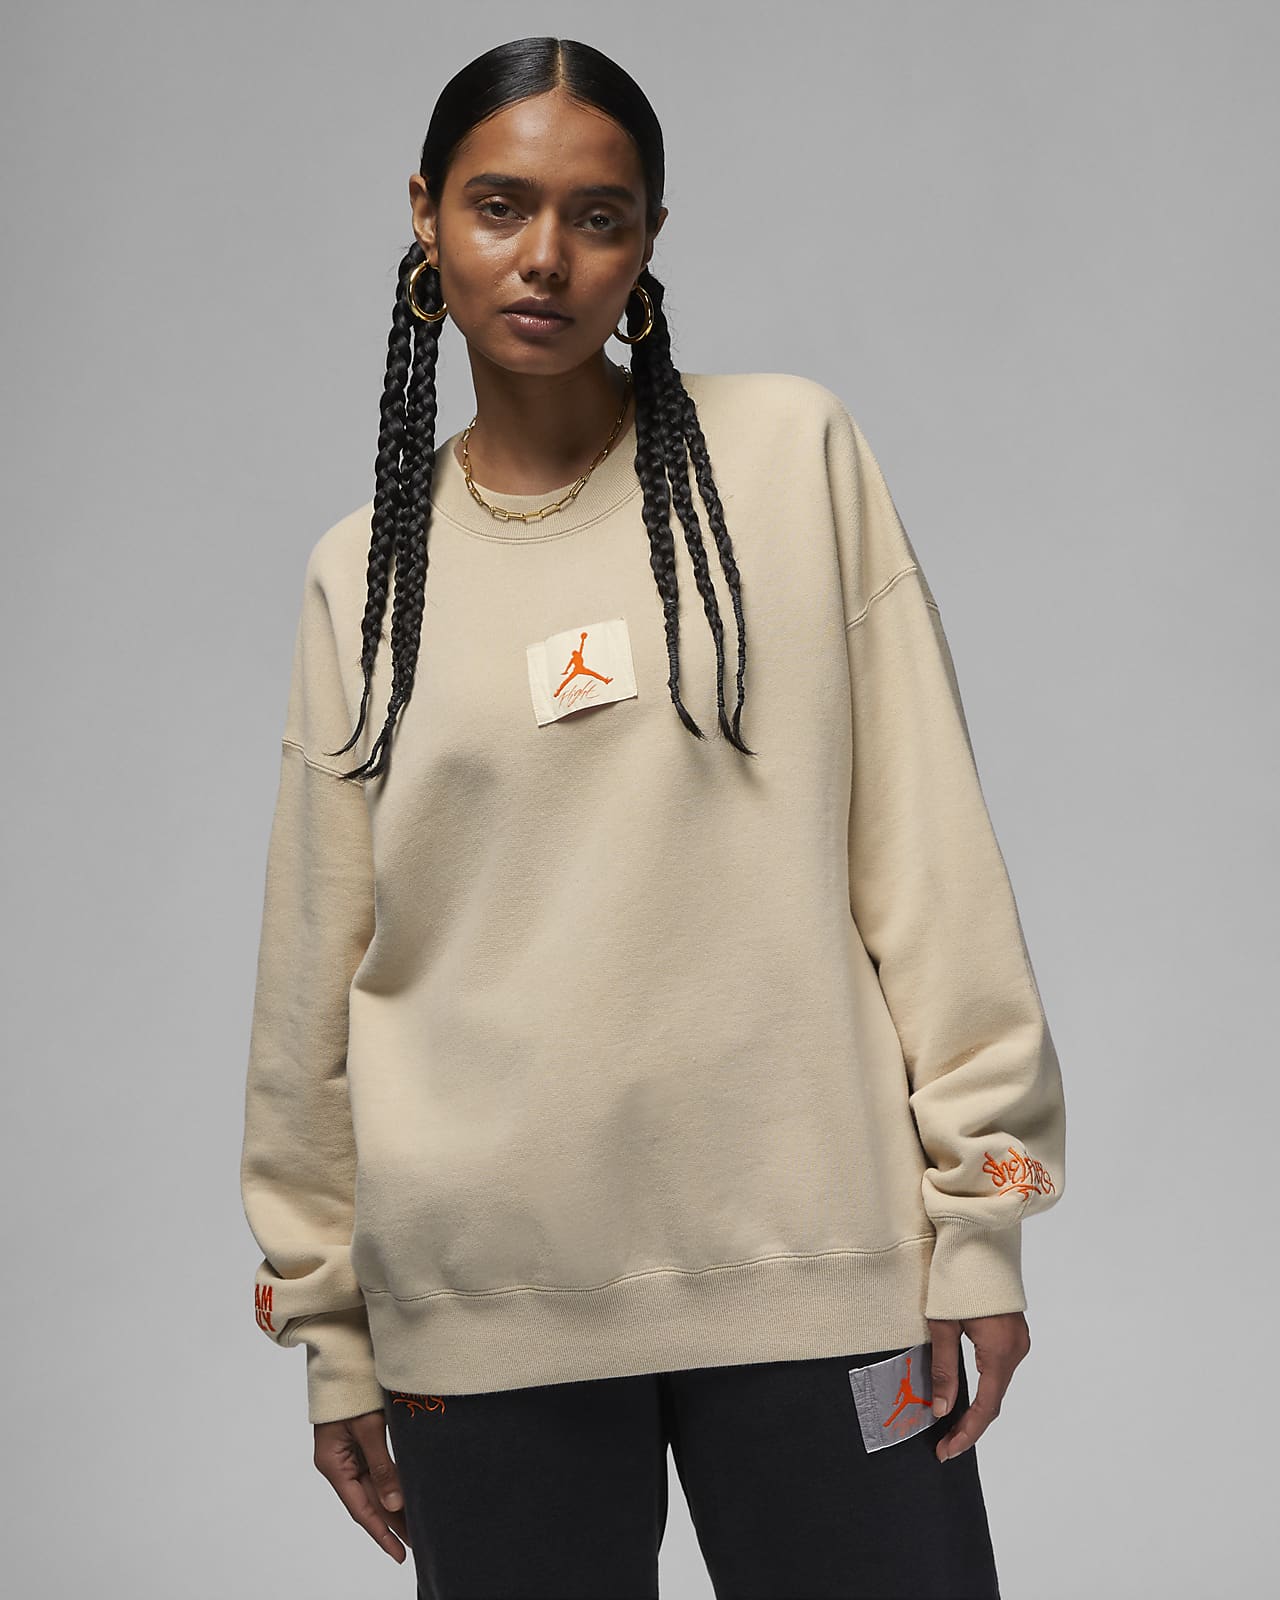 Jordan x Shelflife Damen-Sweatshirt mit Rundhalsausschnitt